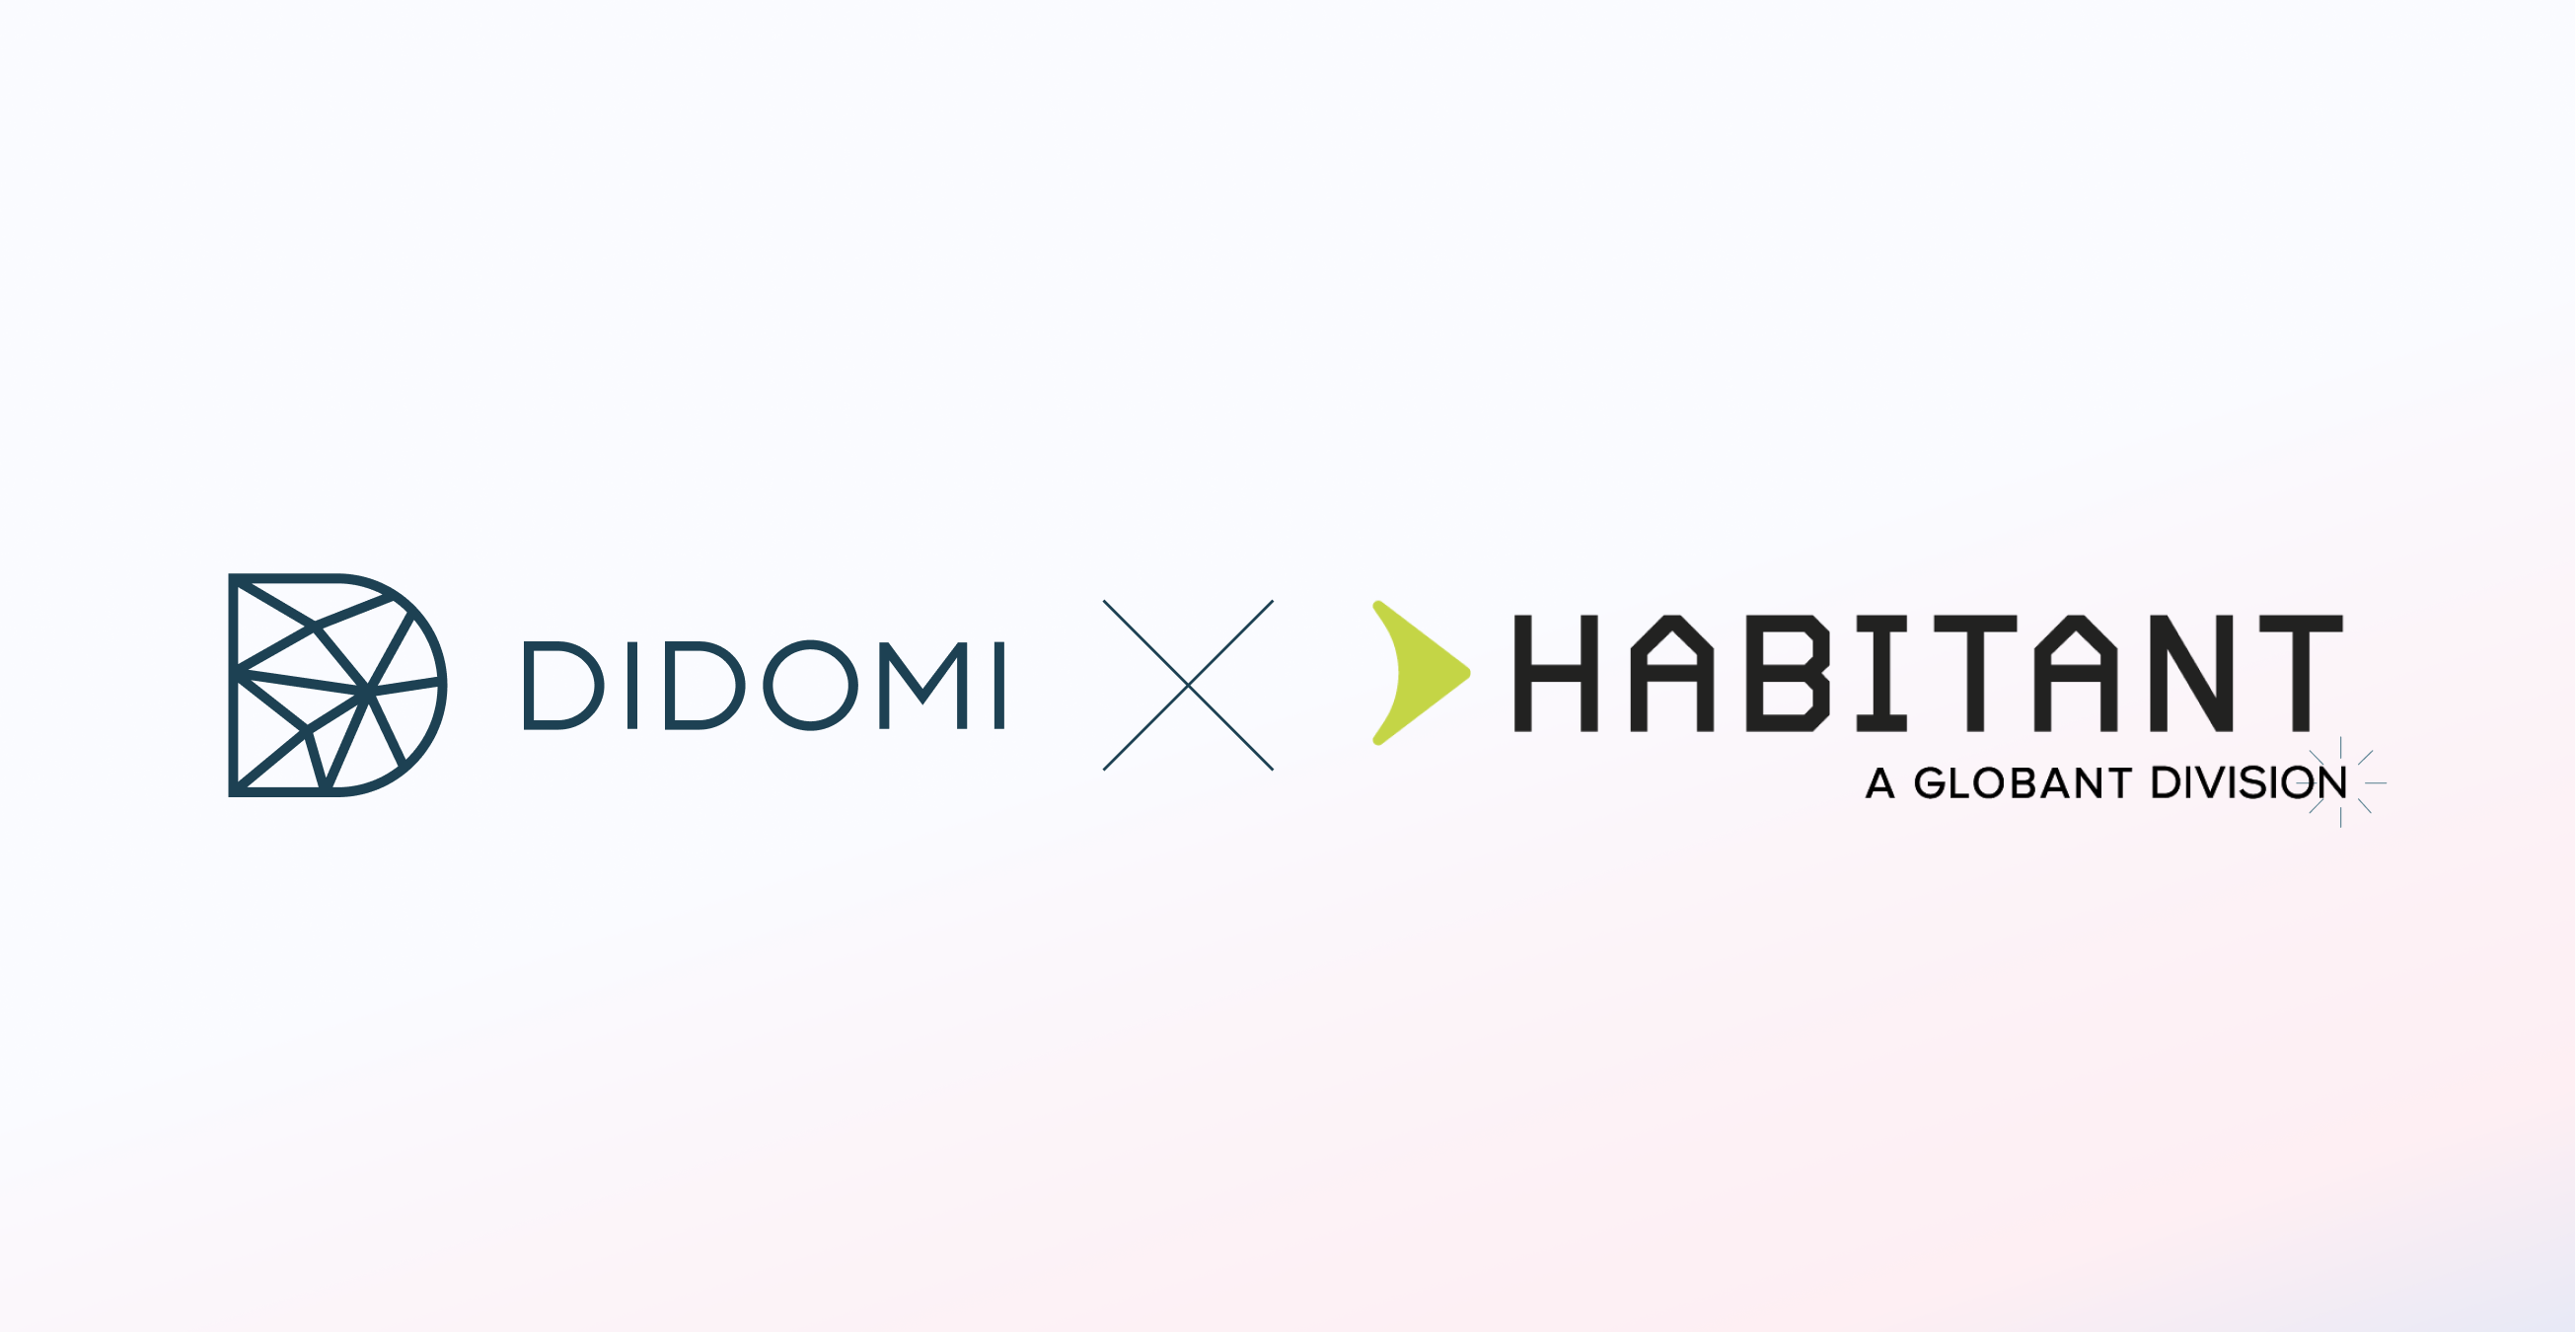 Didomi x HABITANT - “Partnering to grow”